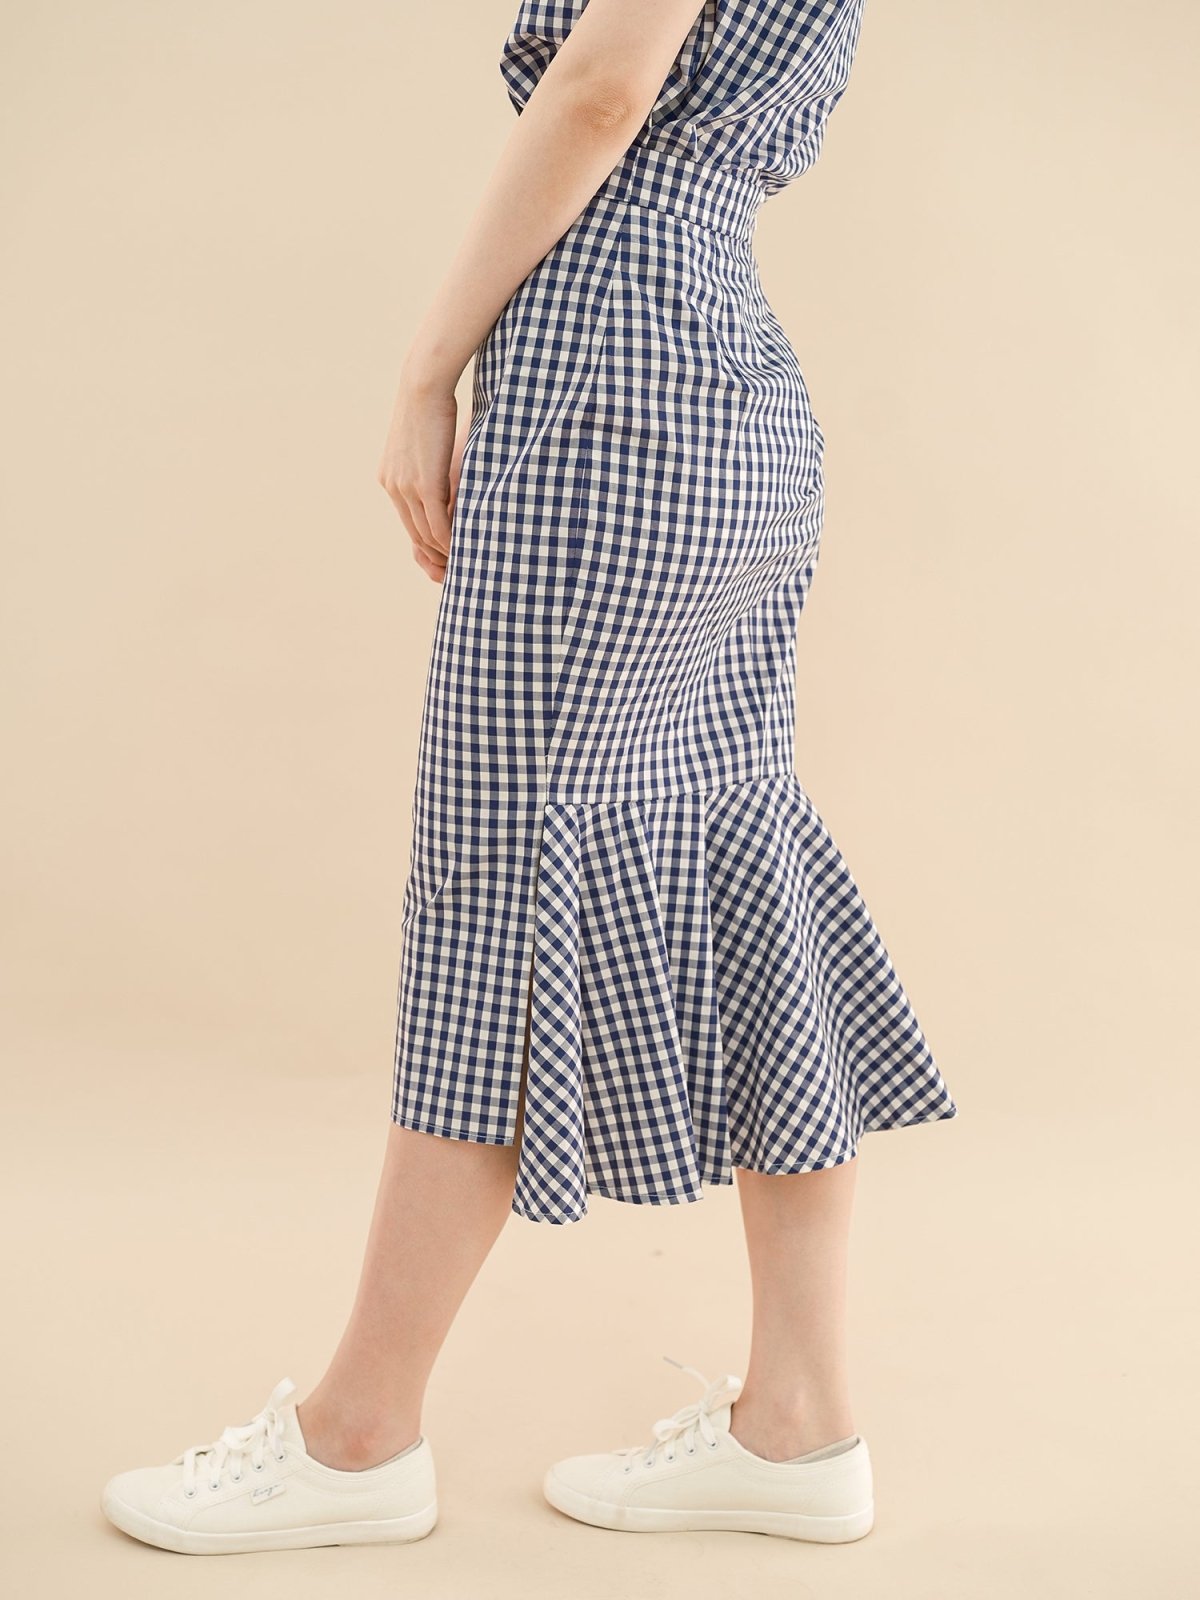 Mermaid Checkered Skirt - DAG-DD8468-21ClassicNavyS - Blue White Checkers - S - D'ZAGE Designs